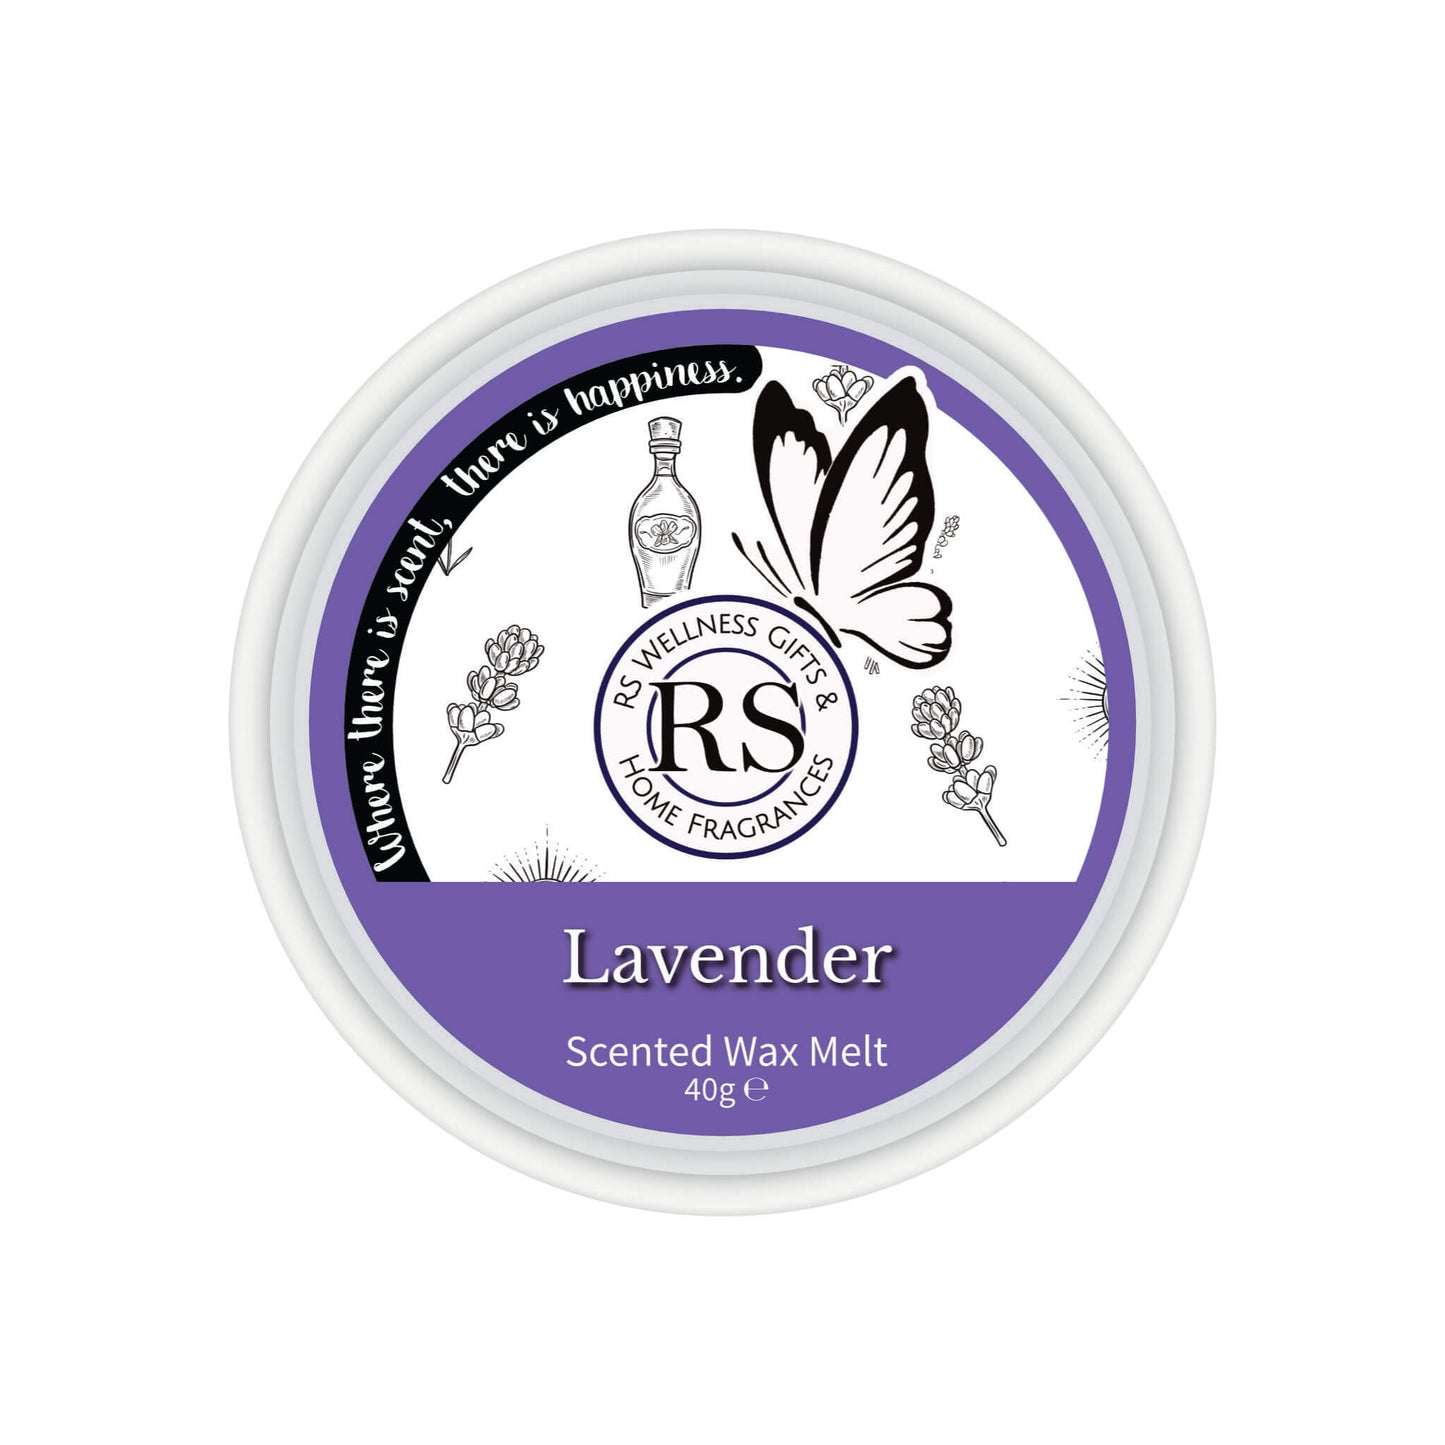 Lavender Wax Melt